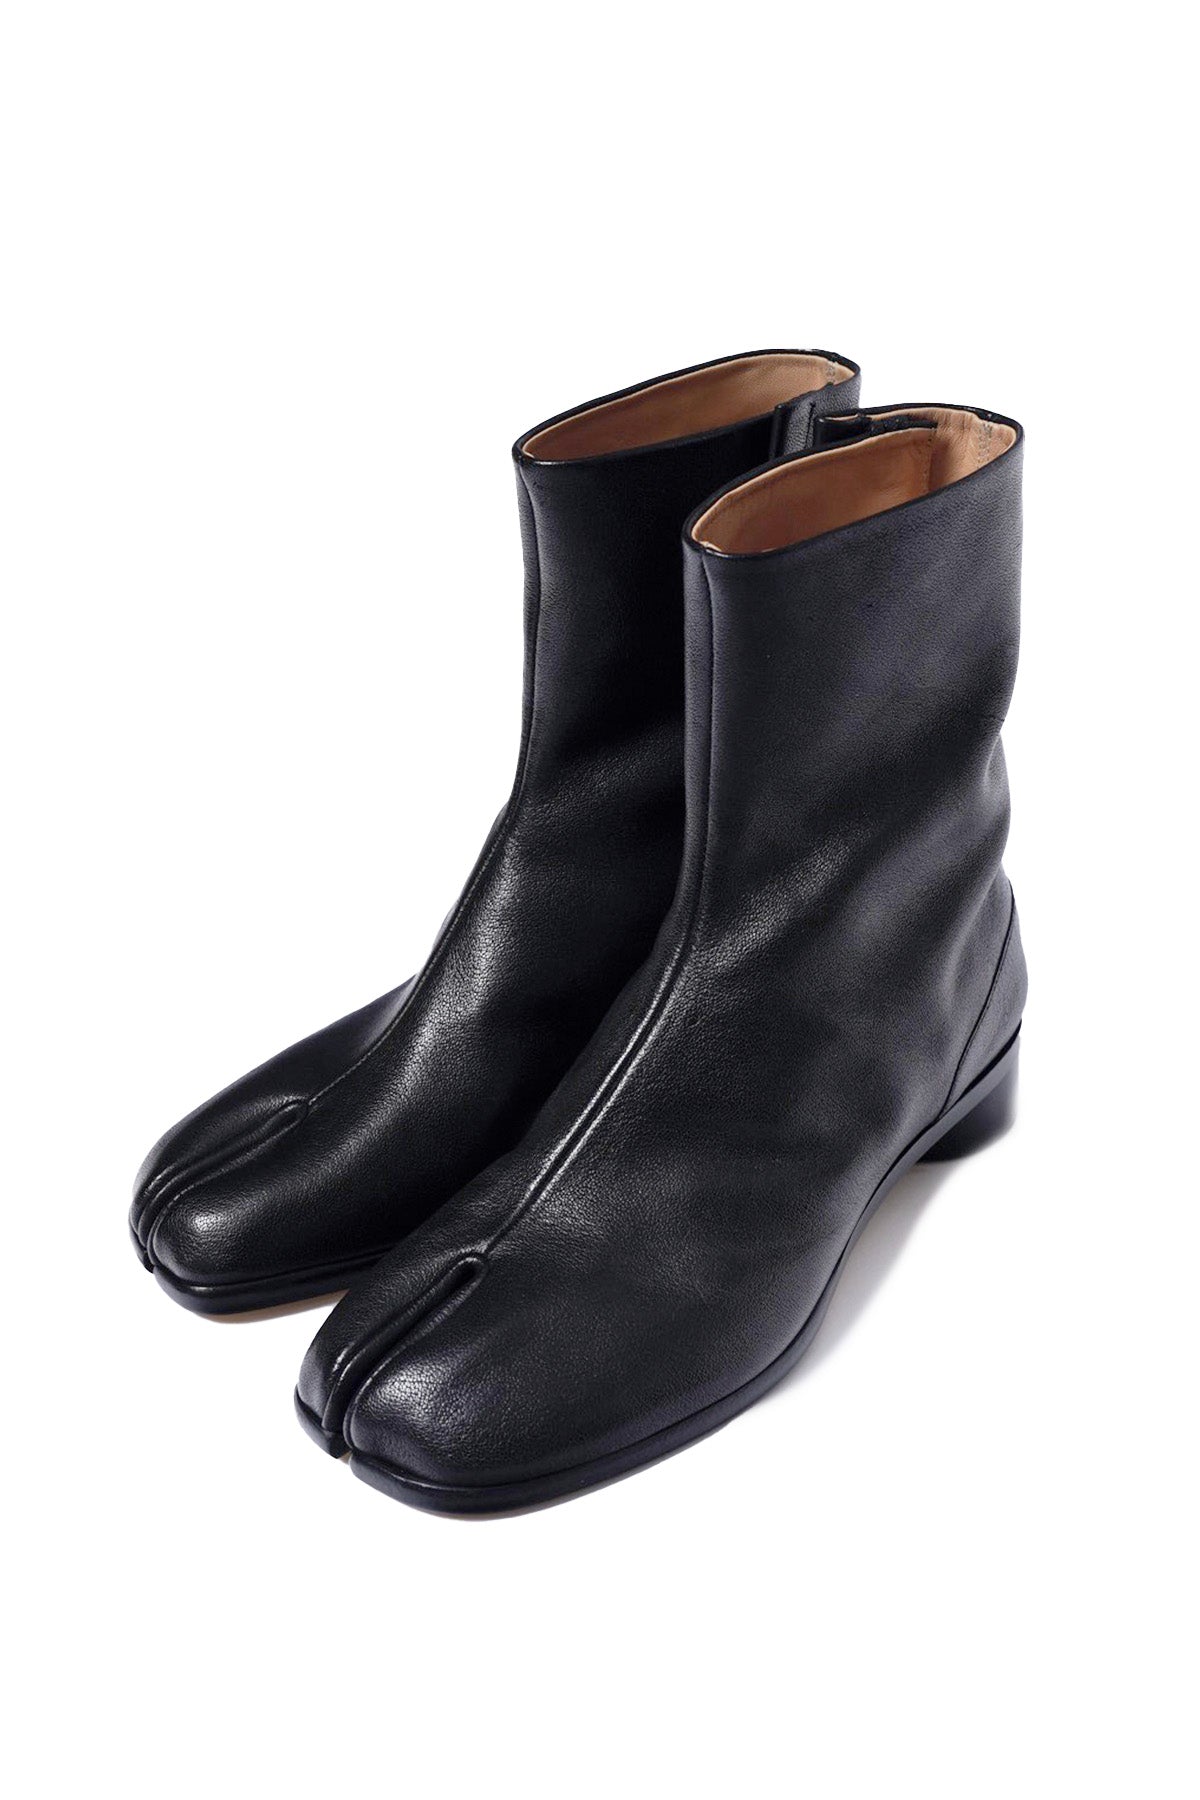 Maison Margiela tabi boots size40 - 靴